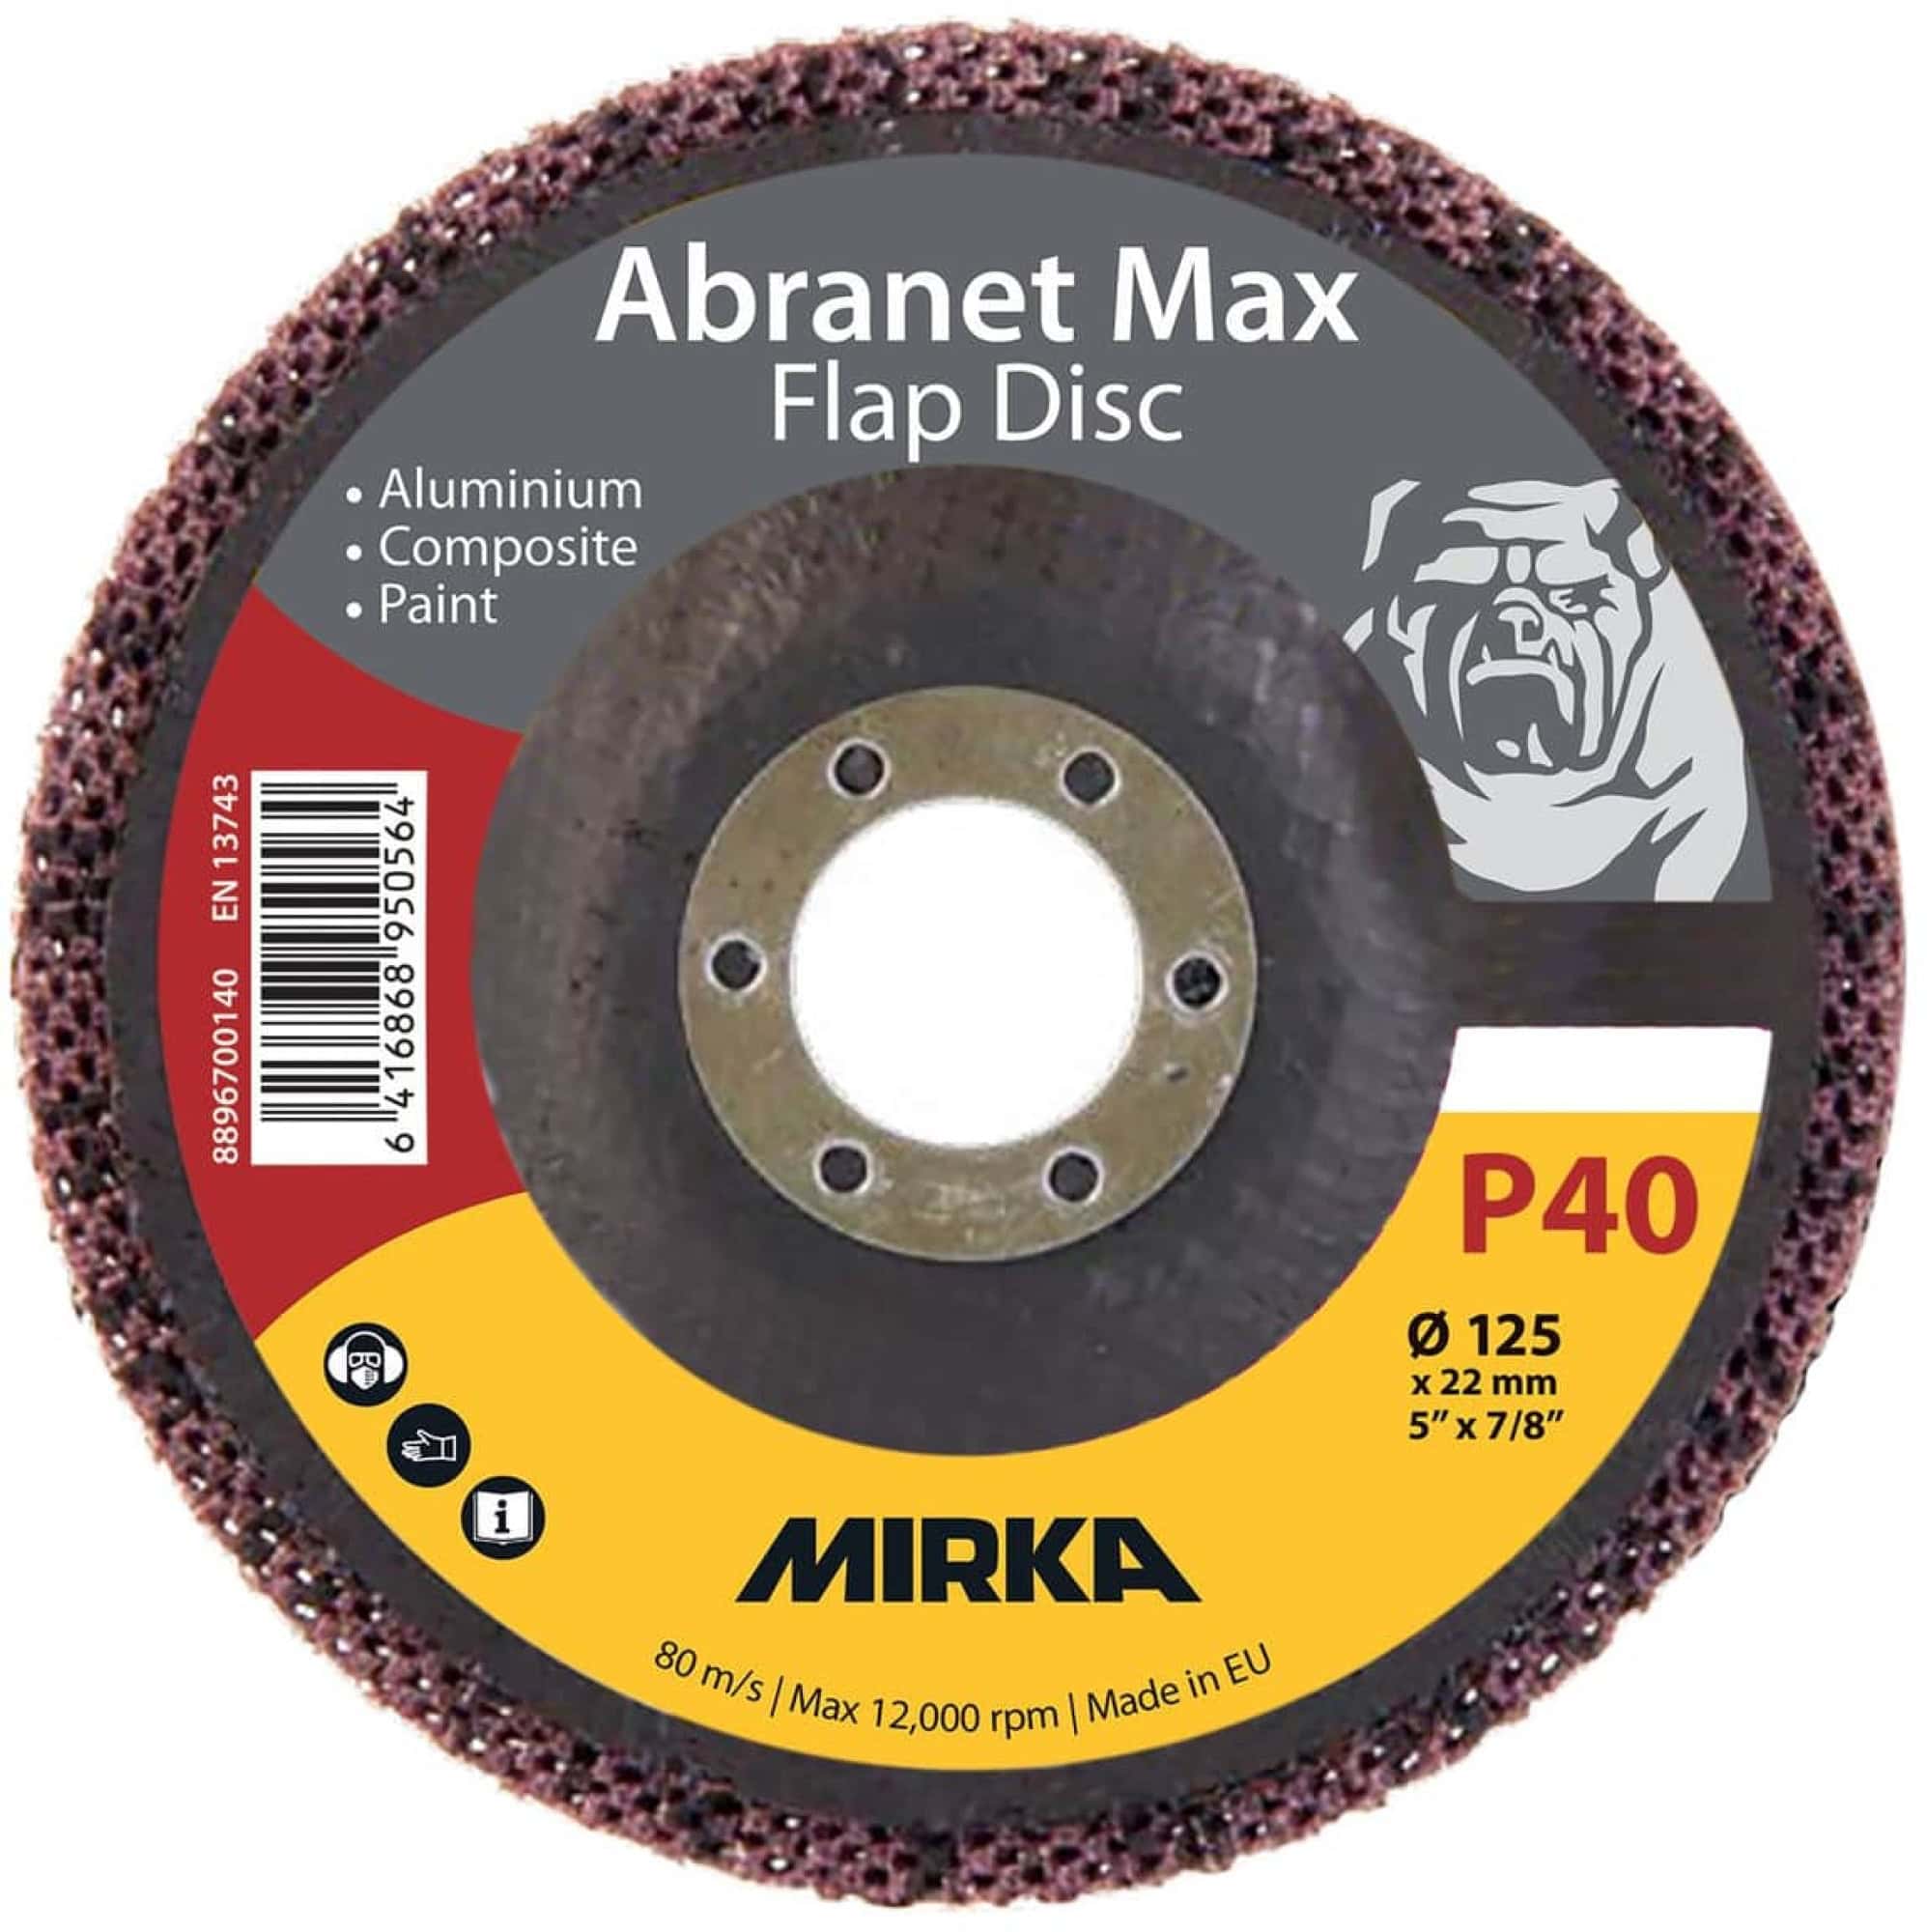 Mirka® Abranet® Max Flap Disc 8896700140, Ø 125 mm x 22 mm, P40, Fächerschleifscheibe mit Aluminiumoxidkorn